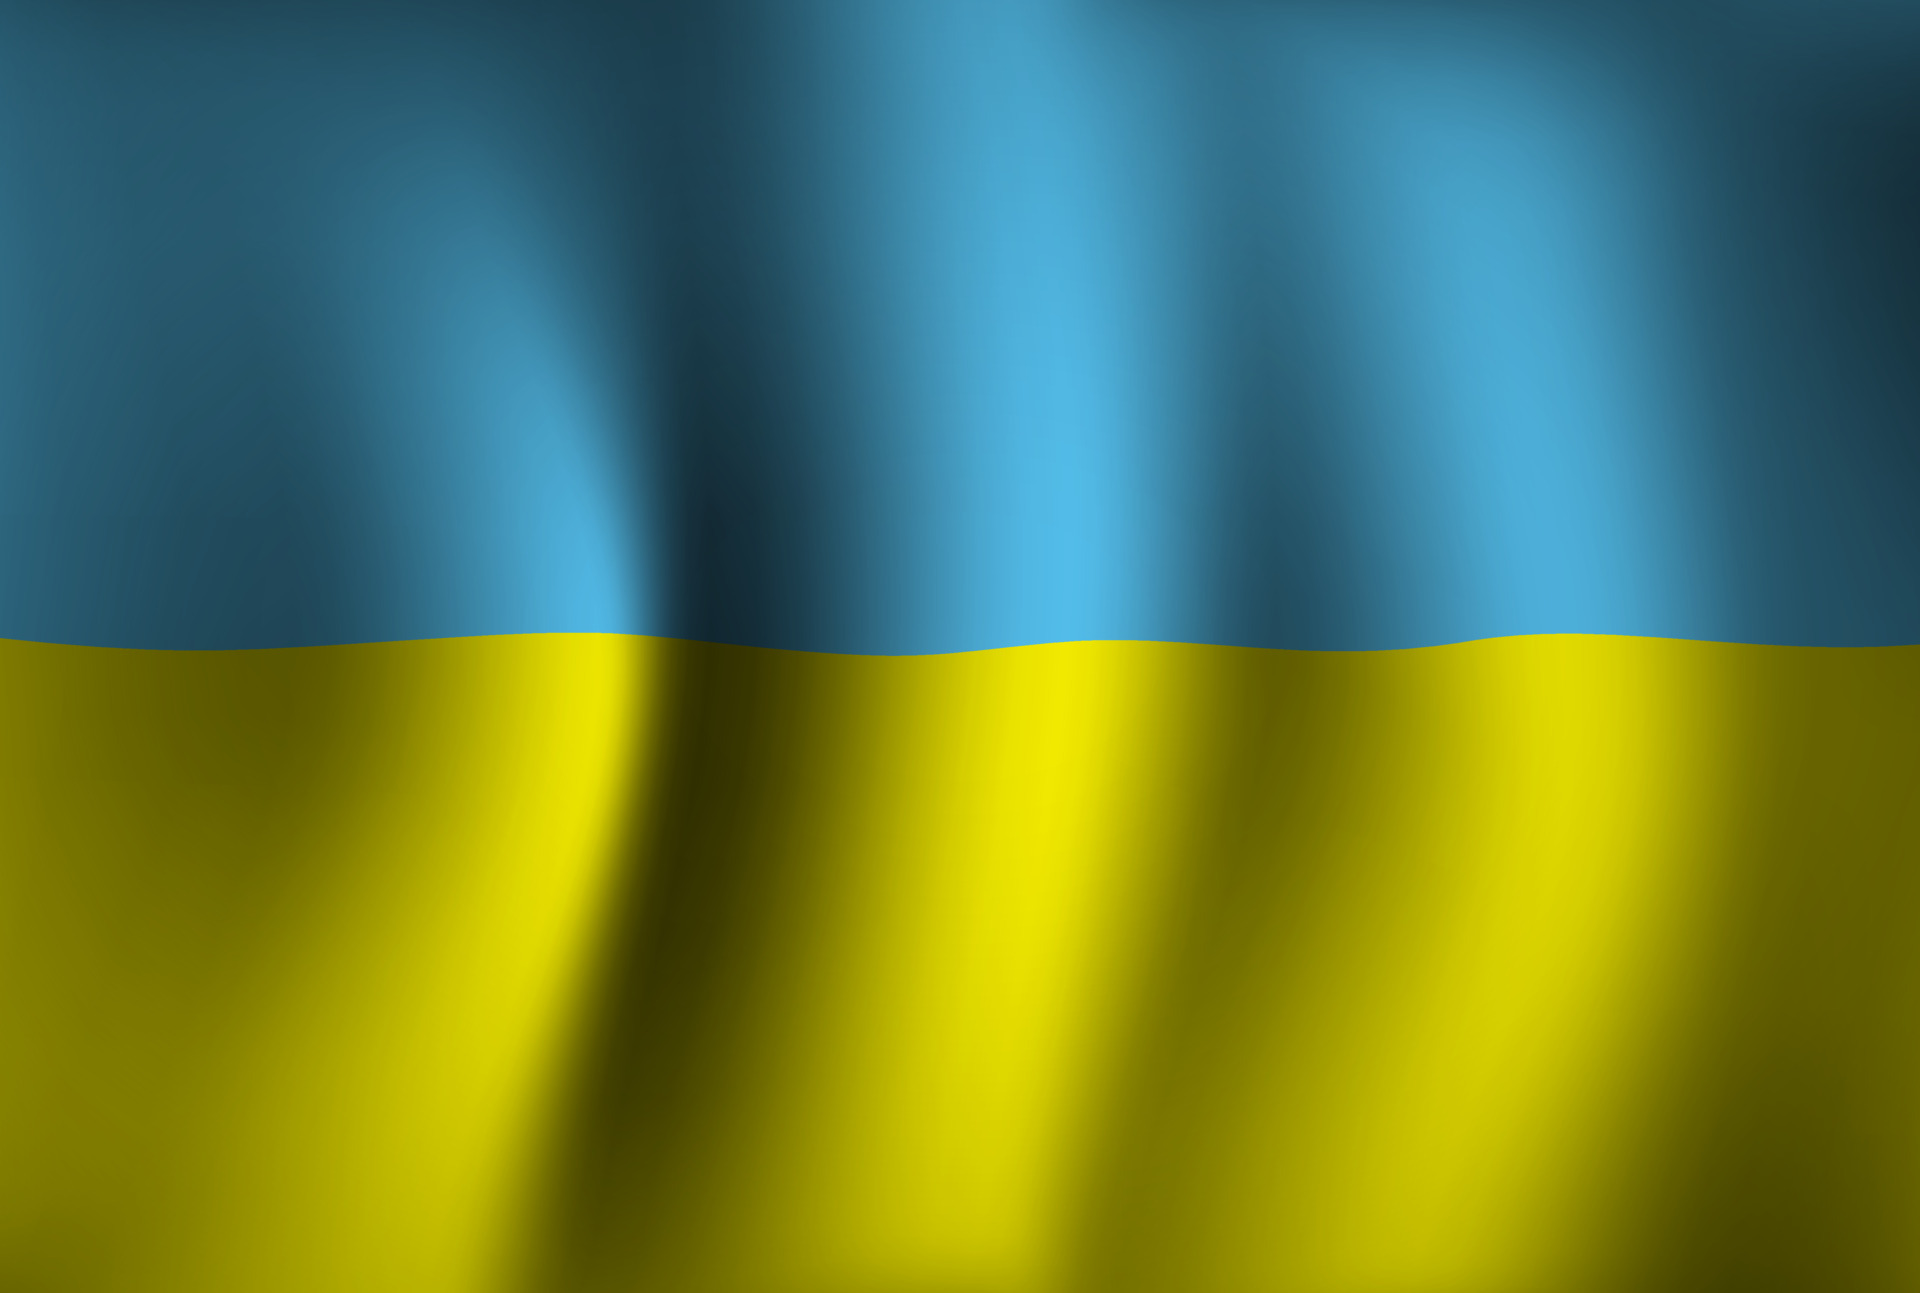 USA and Ukraine flags 3D Waving flag design USA Ukraine flag picture  wallpaper USA vs Ukraine image3D rendering USA Ukraine relations  alliance Stock Photo  Alamy